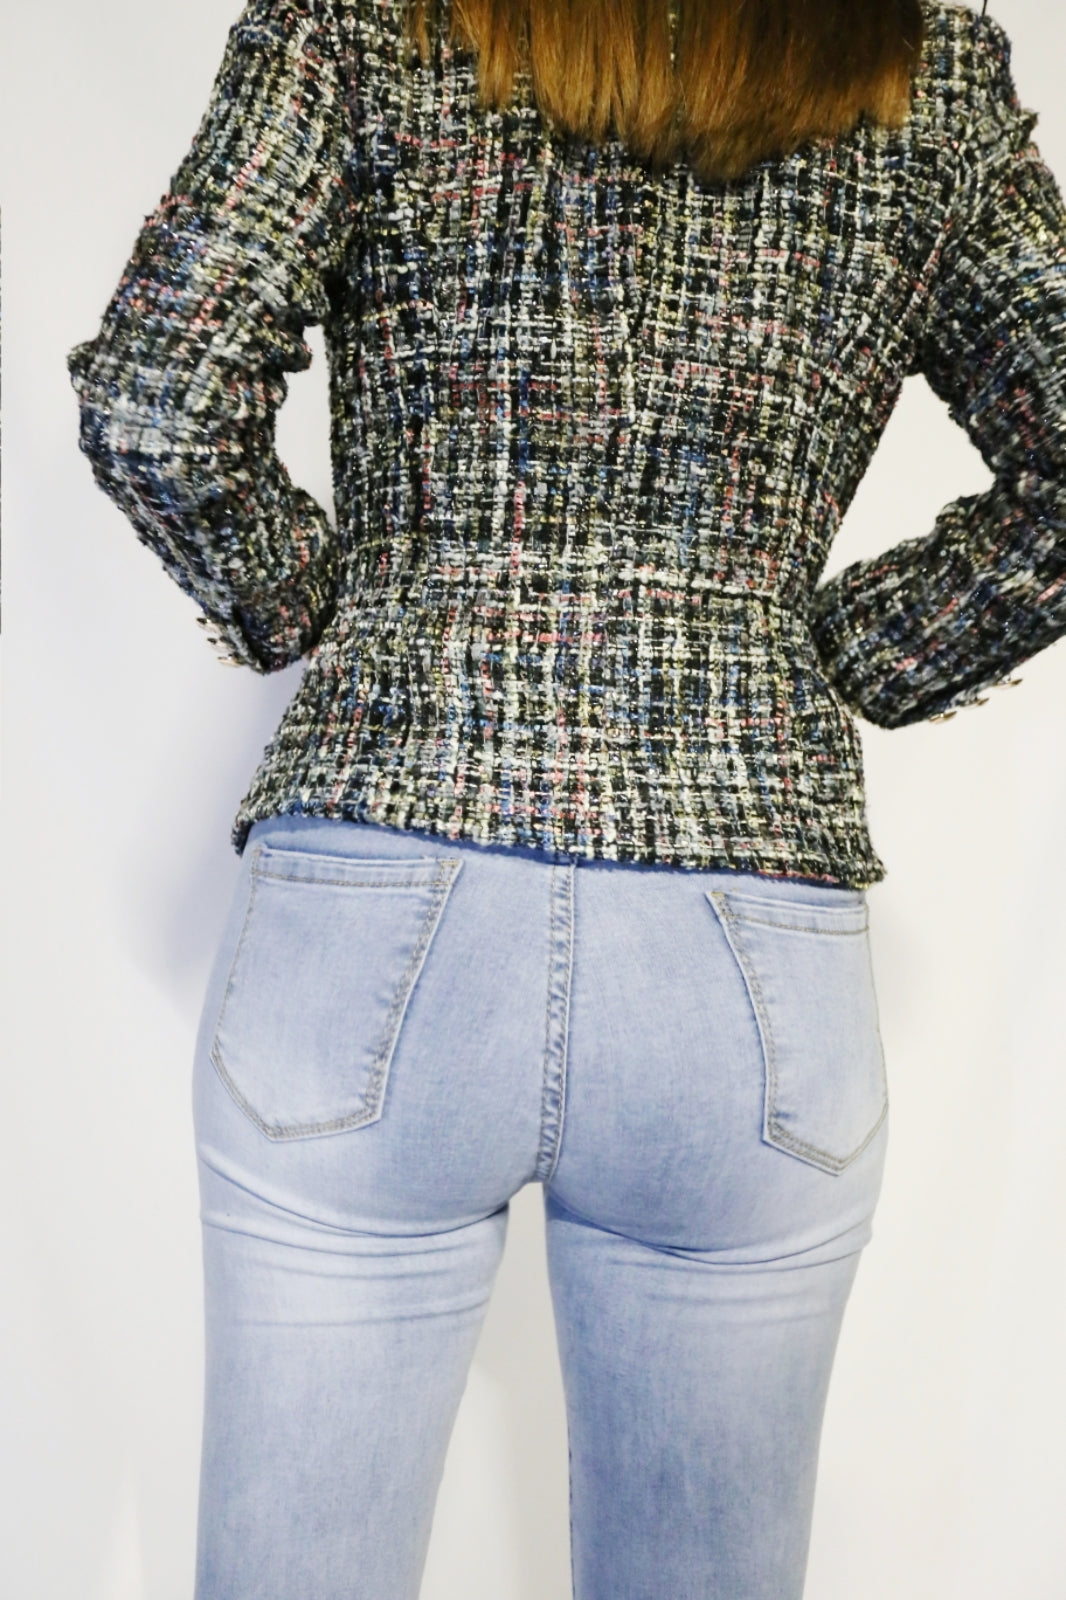 udsultet Leonardoda Terminologi Chanel-inspired Jacket and jeans - Dress Me by Marcela